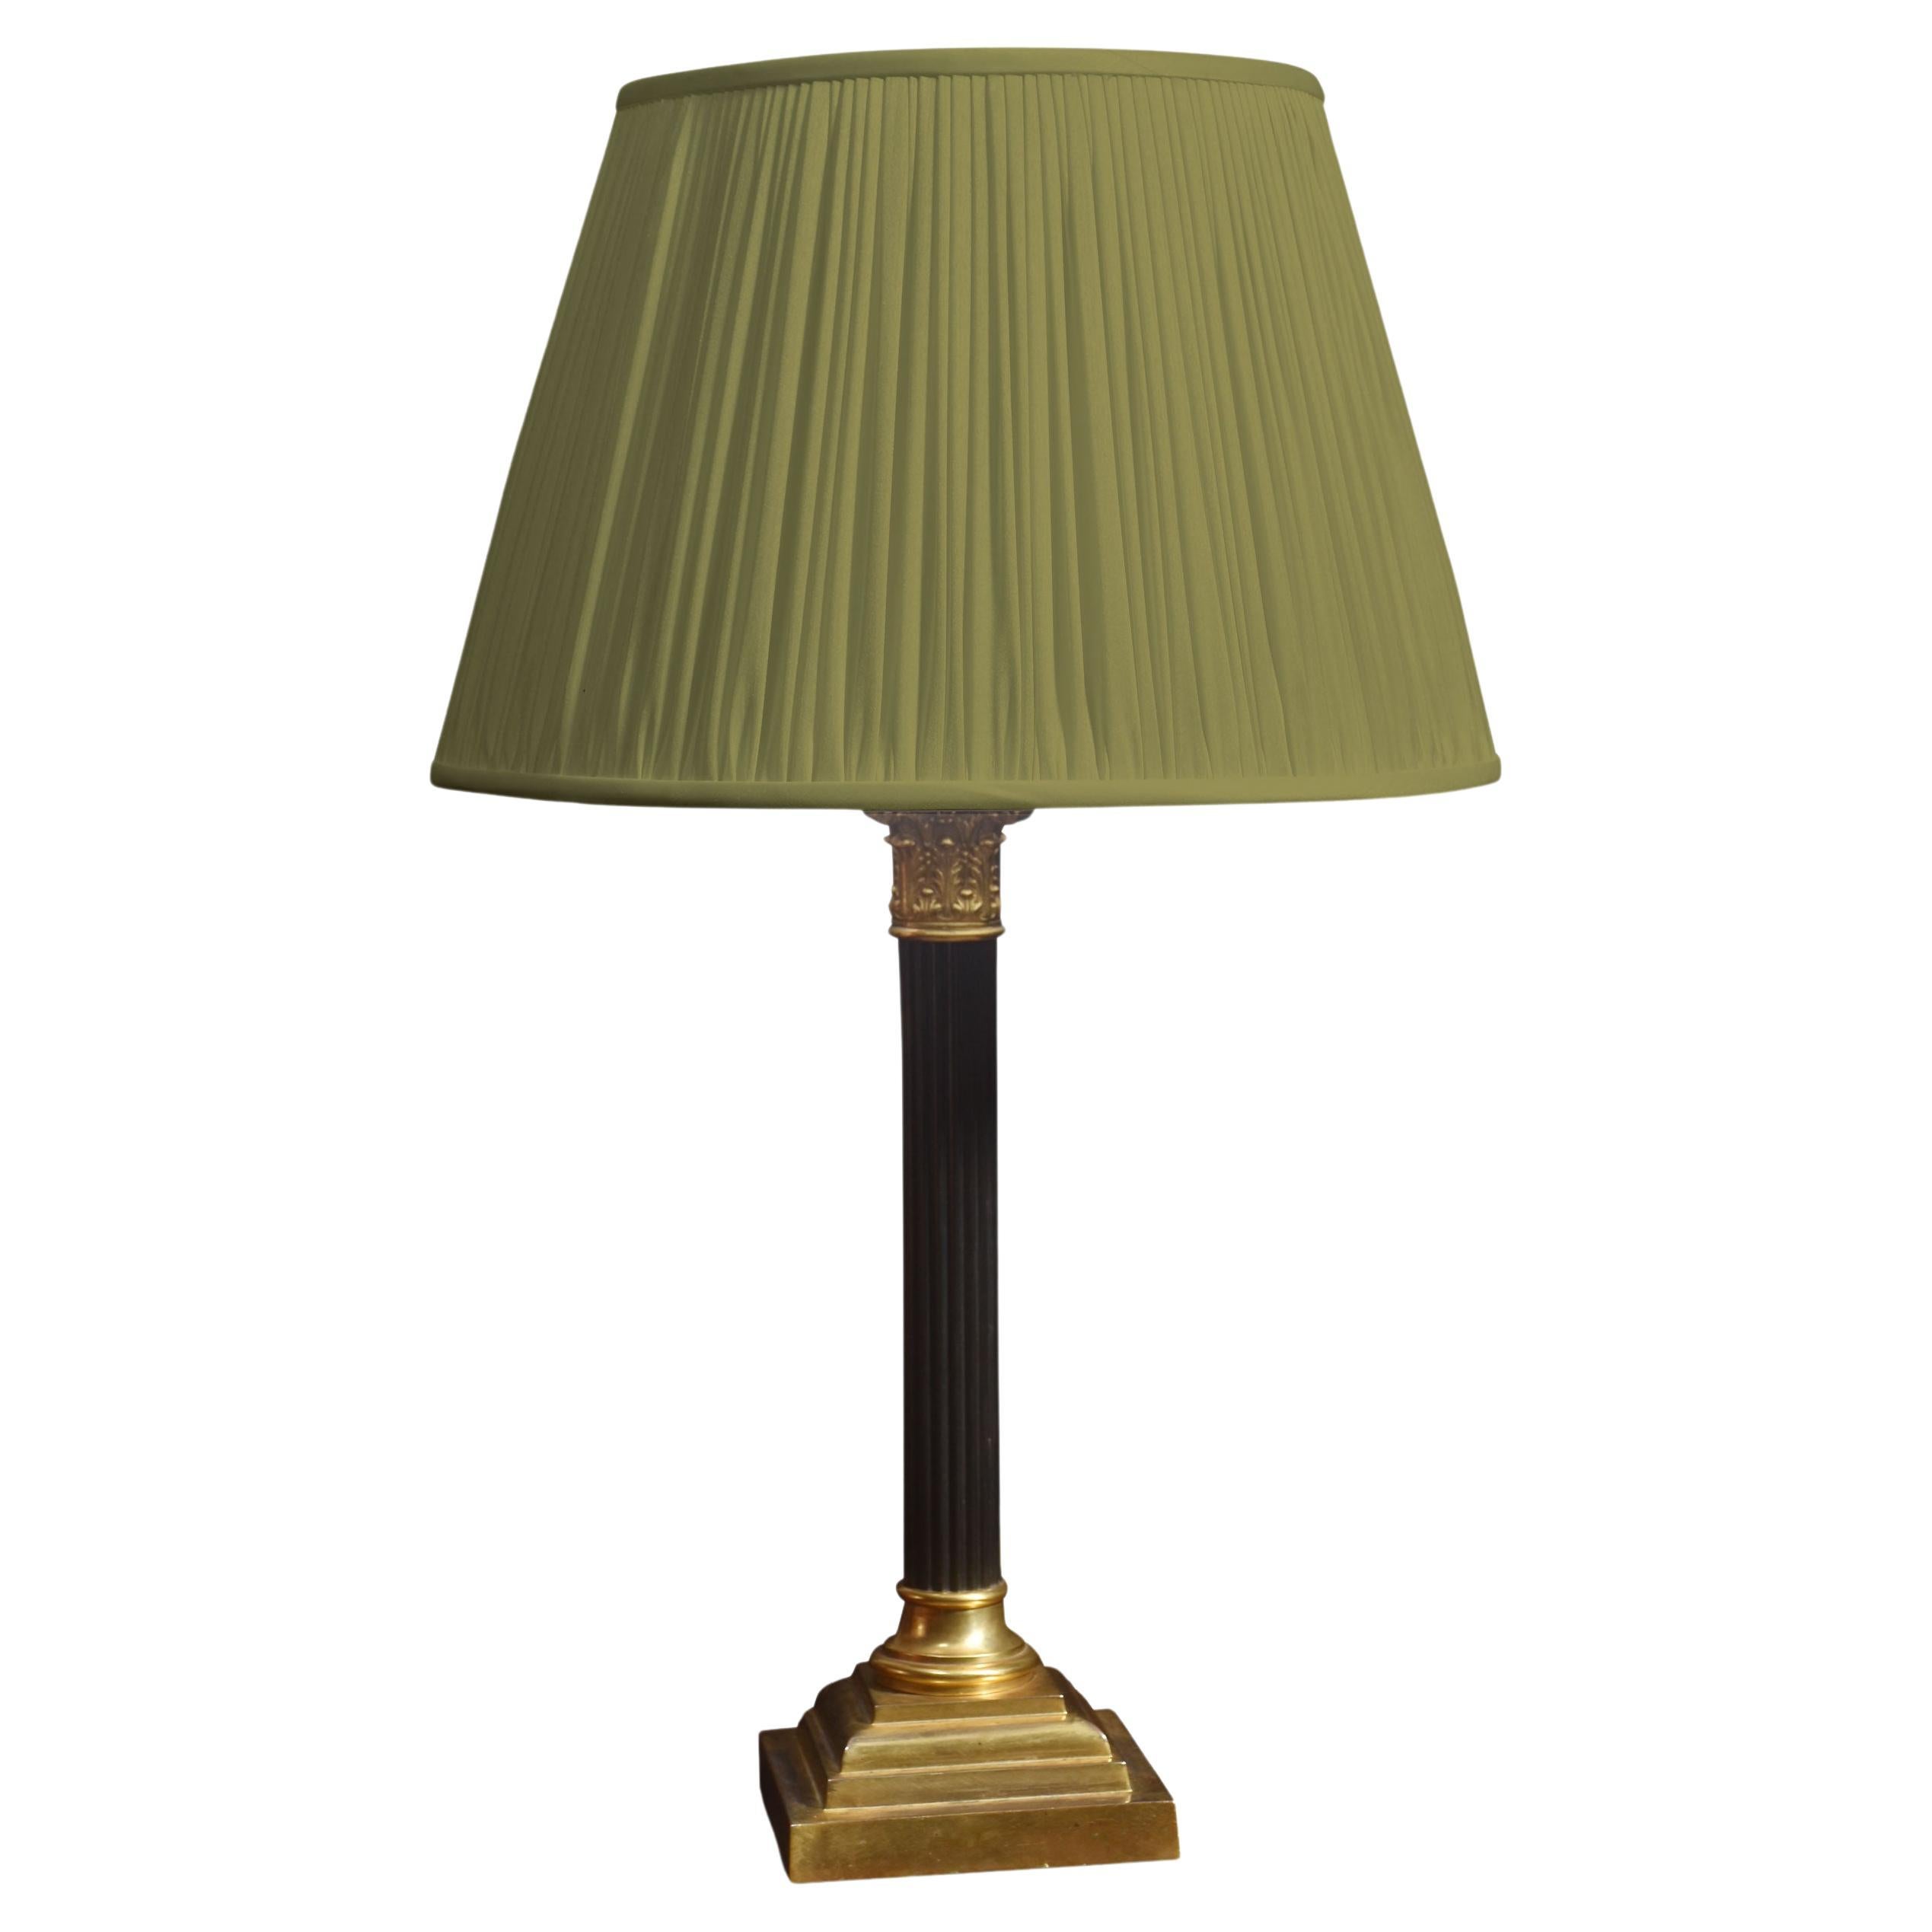 Brass corinthian column table lamp For Sale